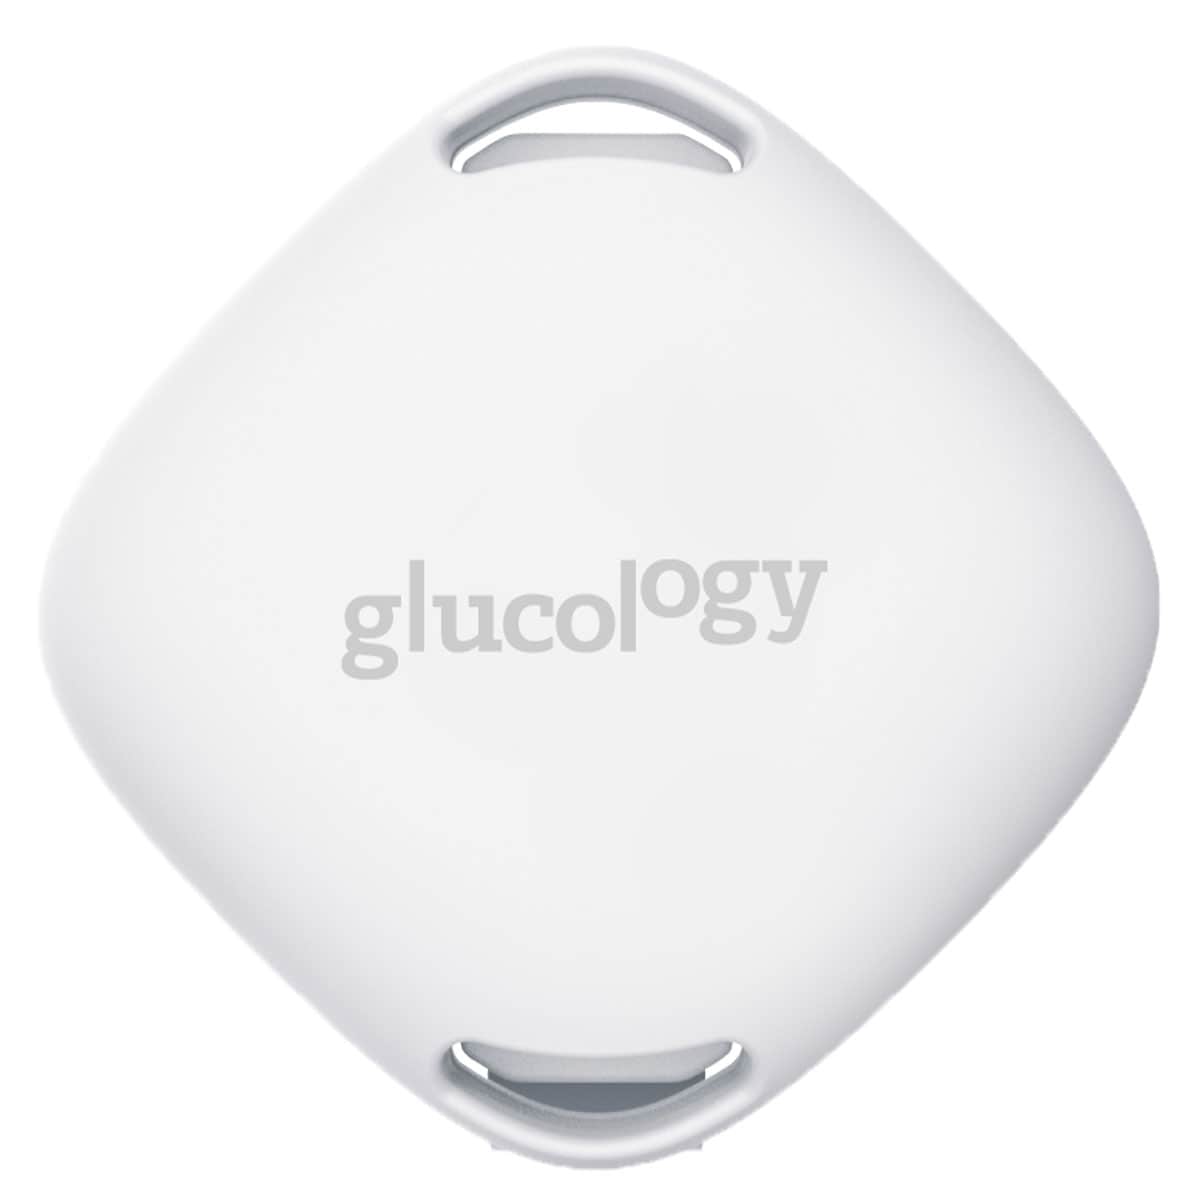 Glucology Wireless Temperature Sensor